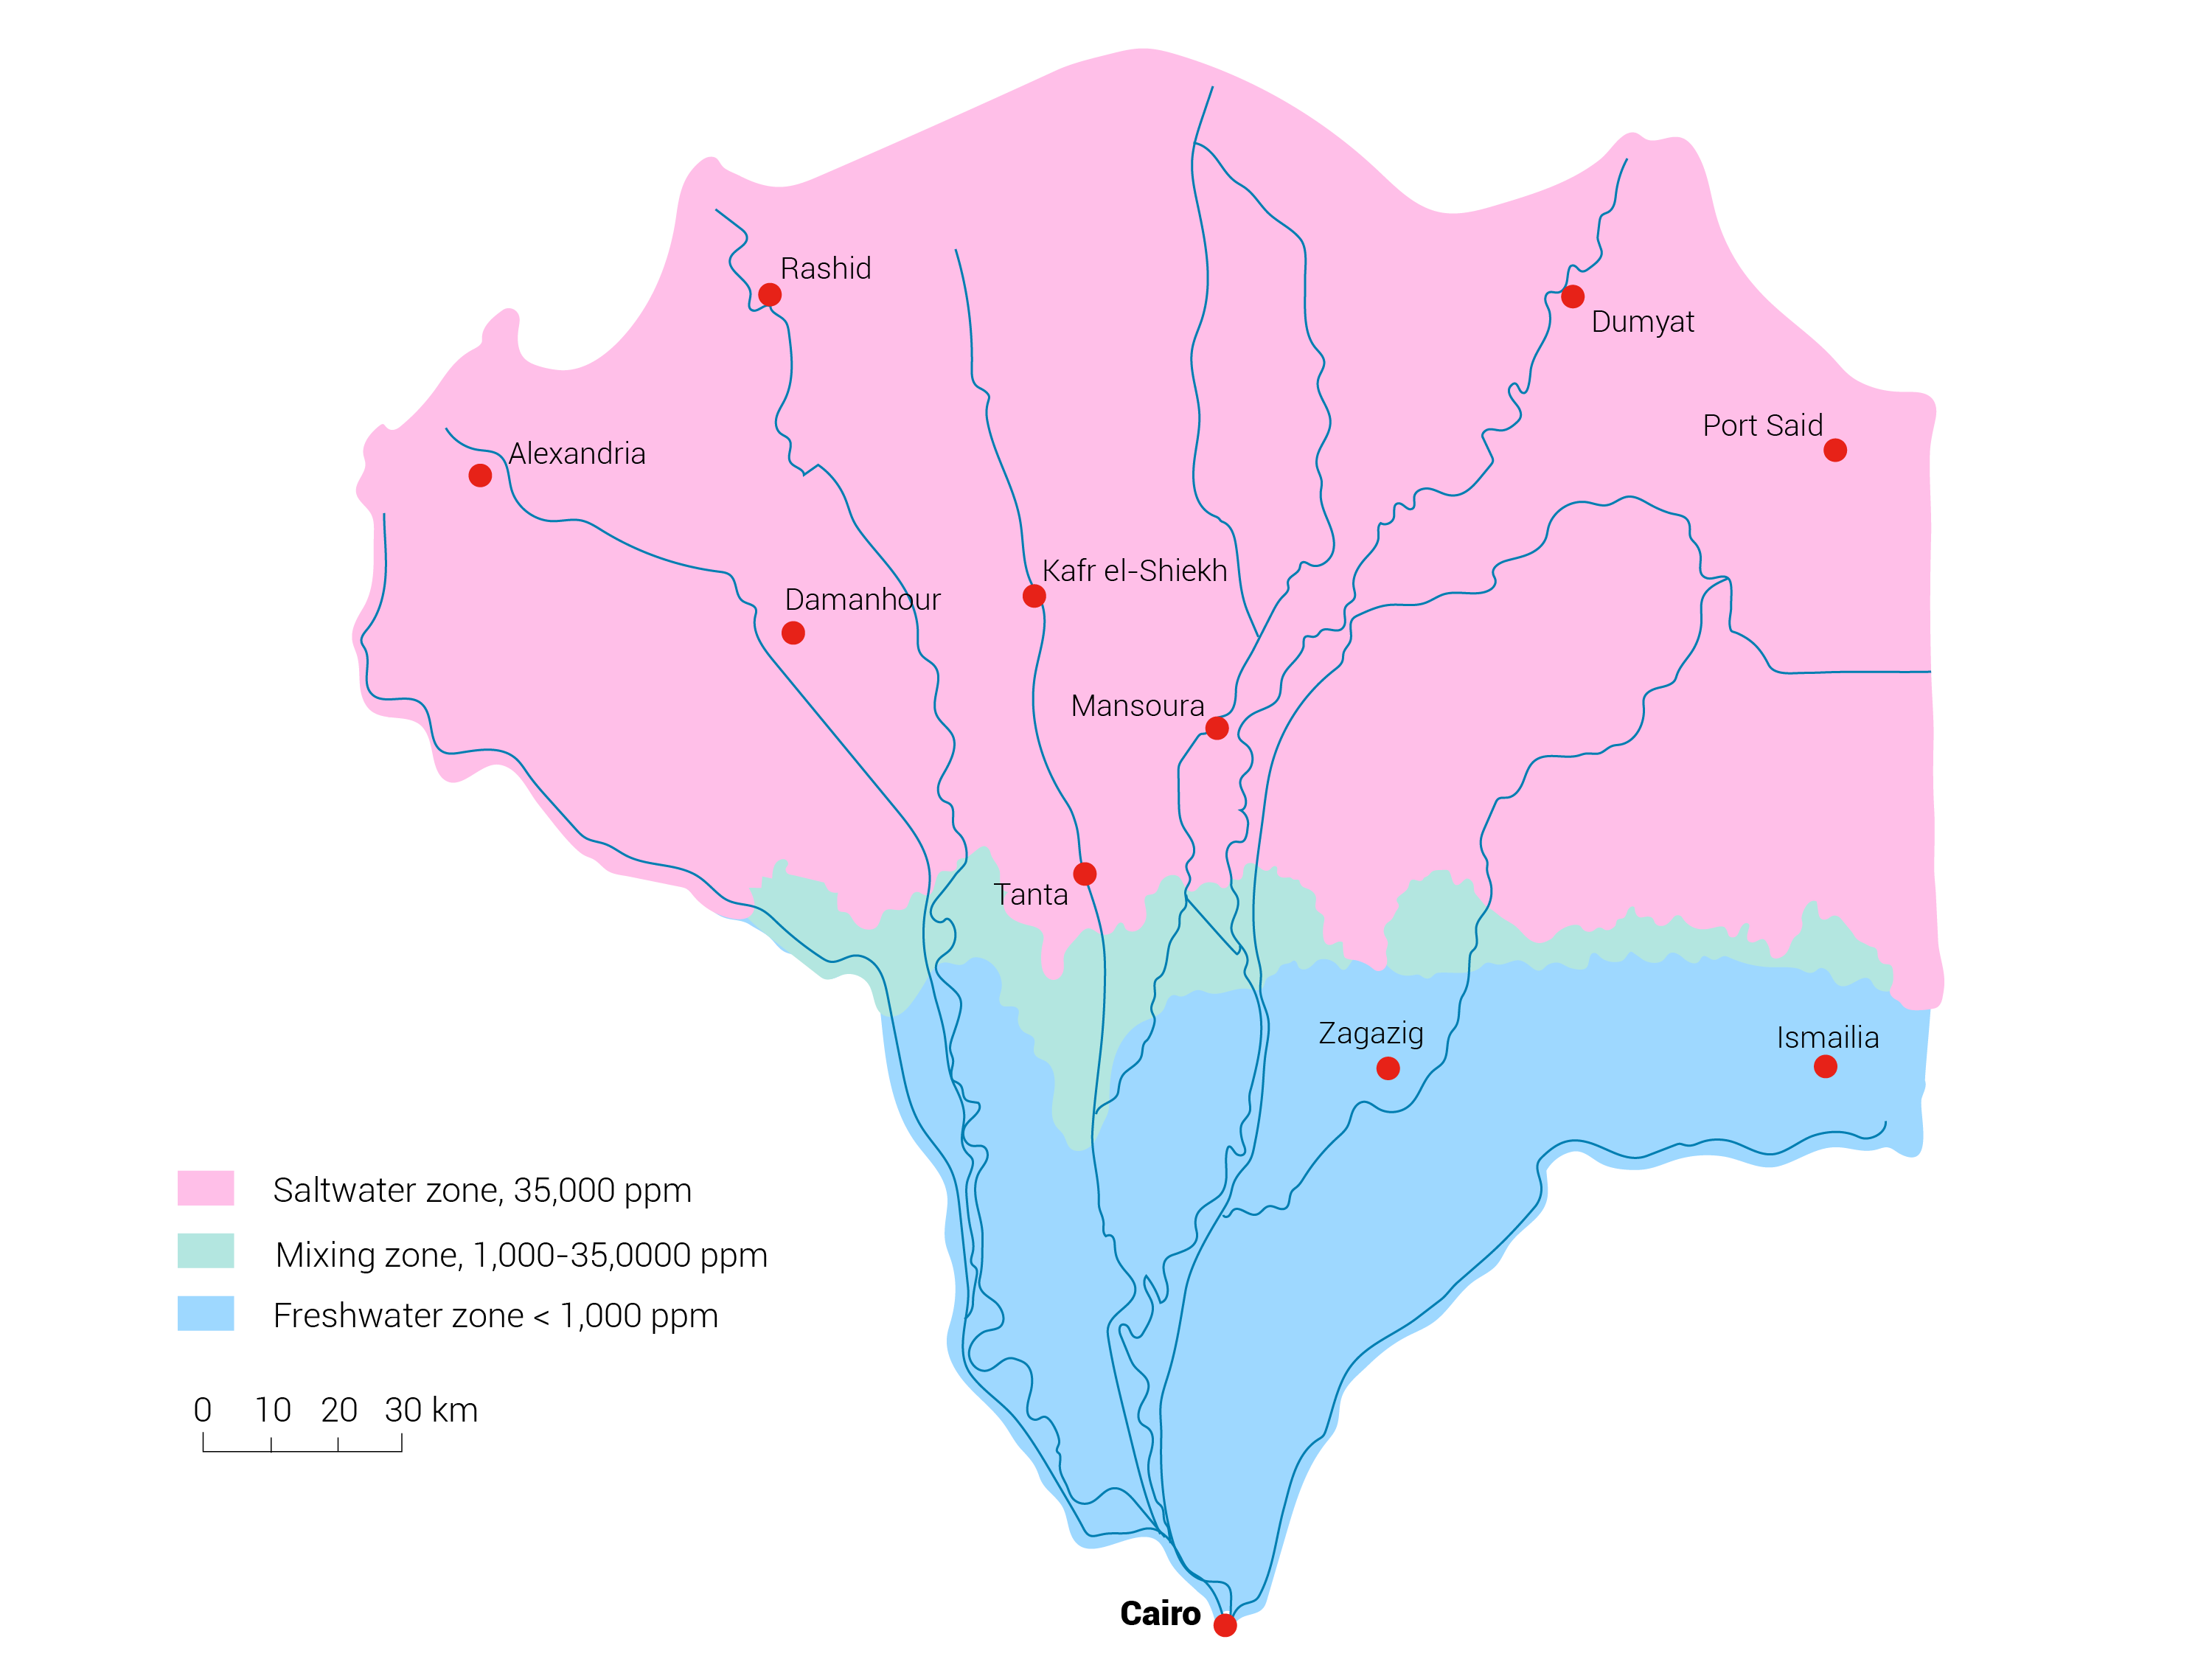 Nile Delta aquifer